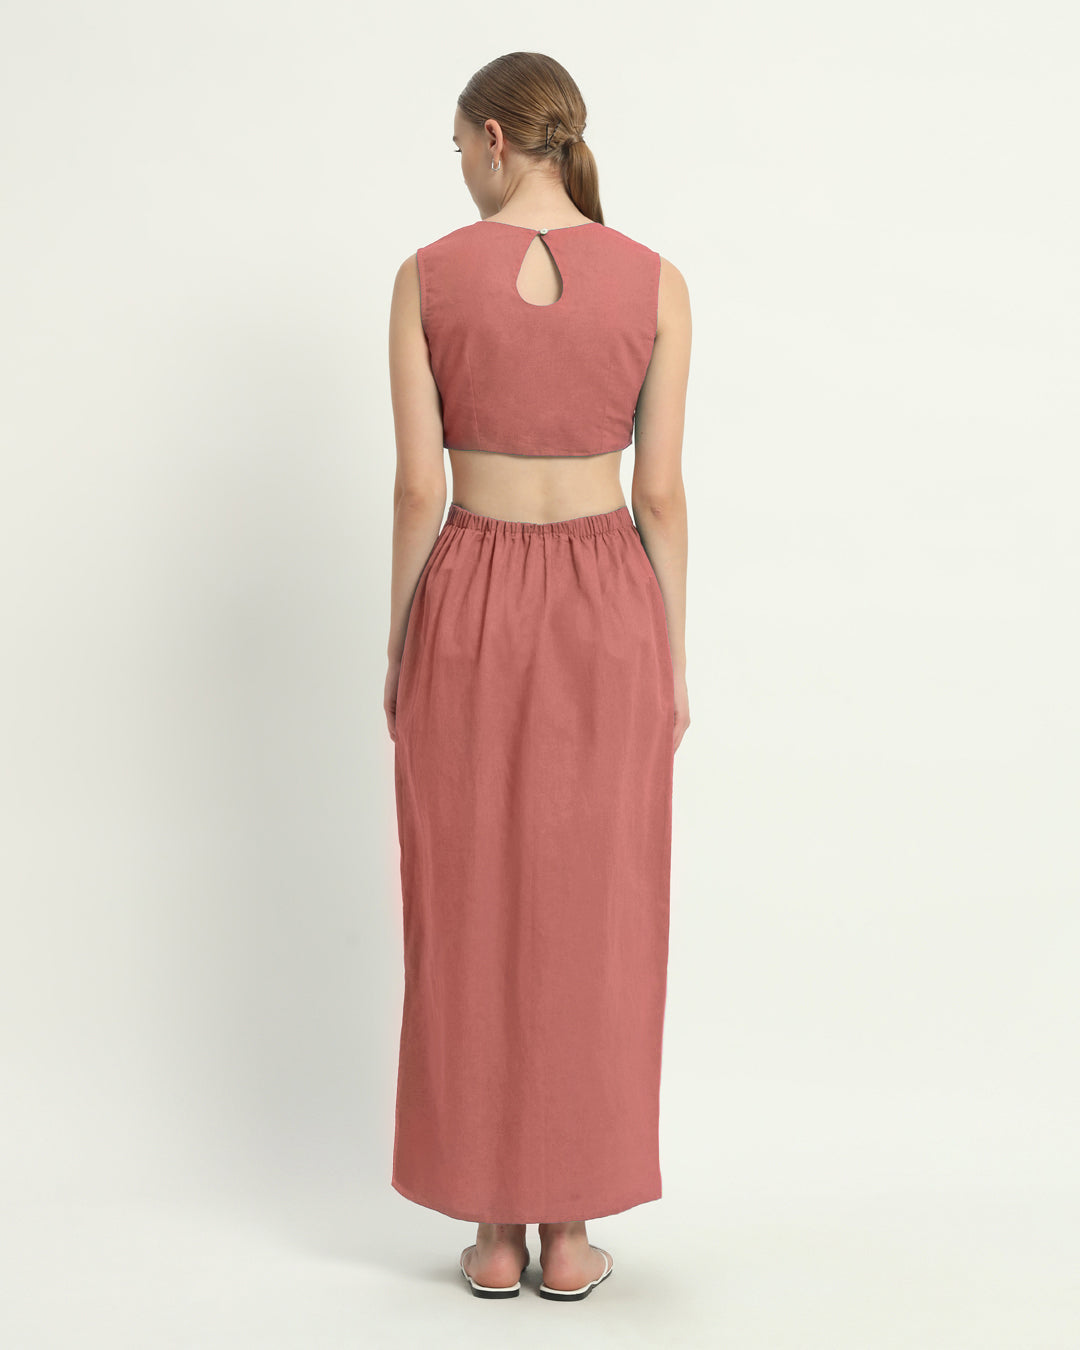 The Ivory Pink Livingston Cotton Dress